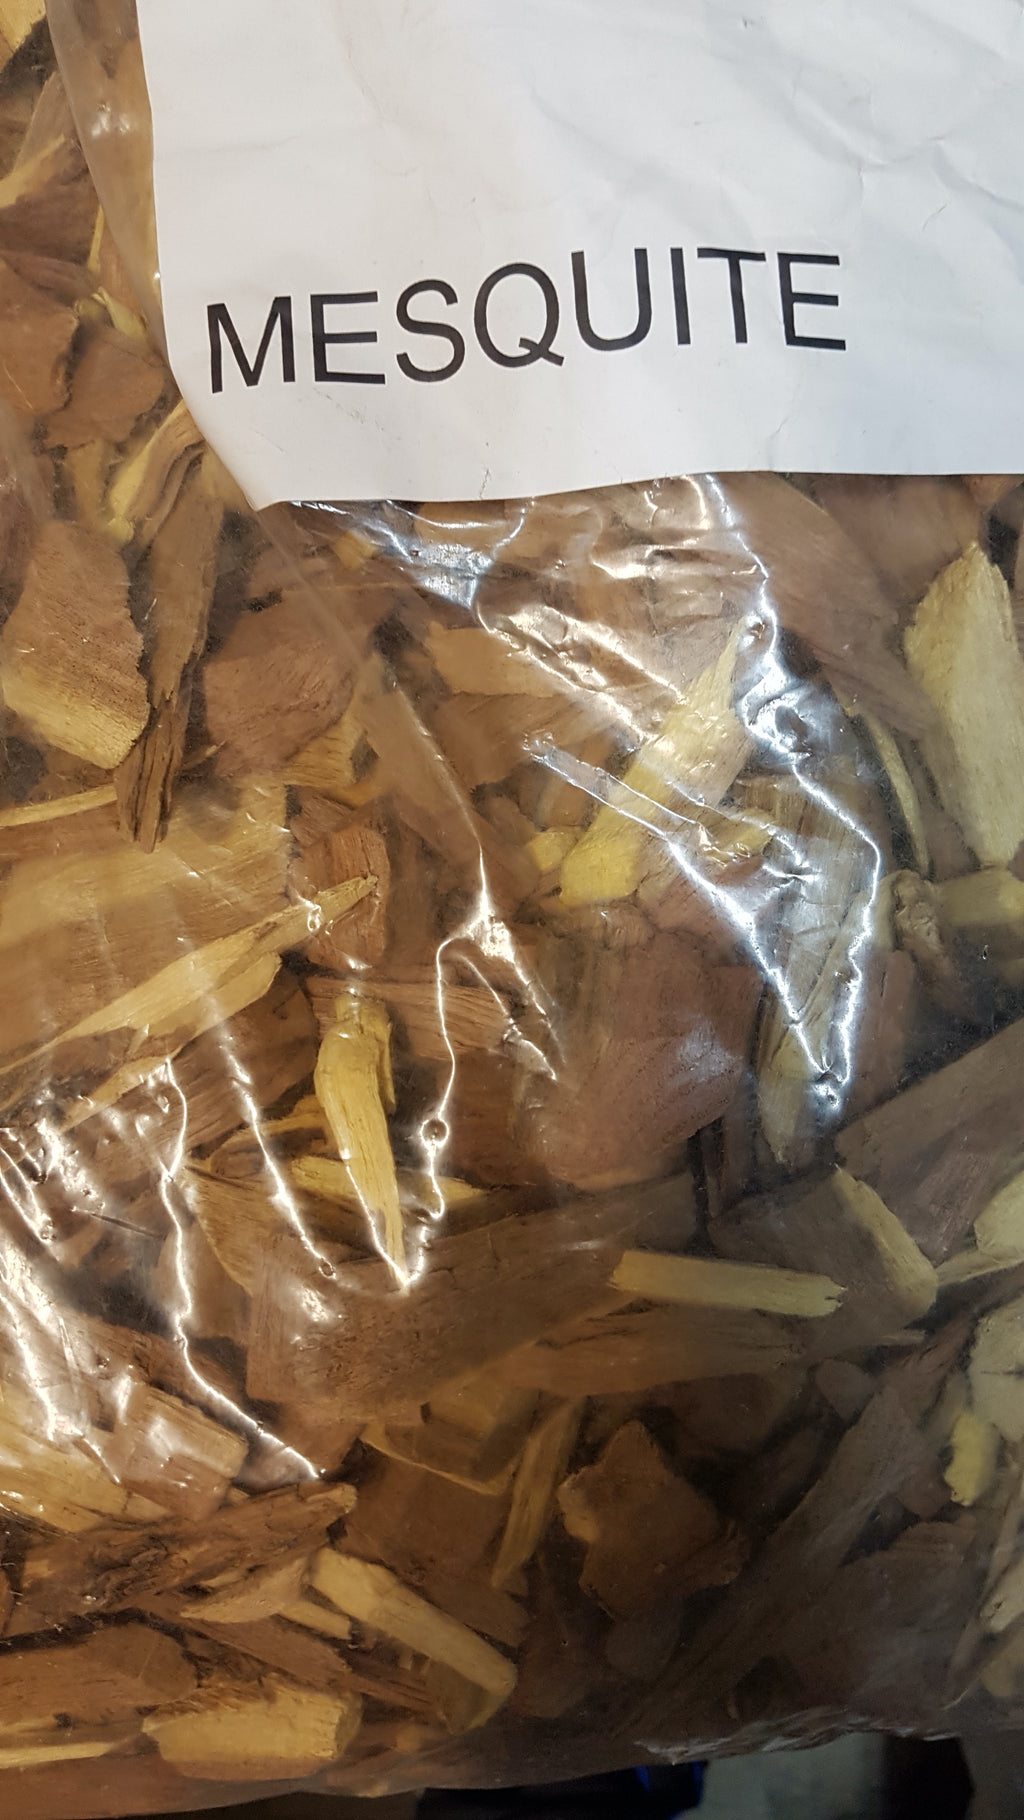 Mesquite Wood Chips 2kgs